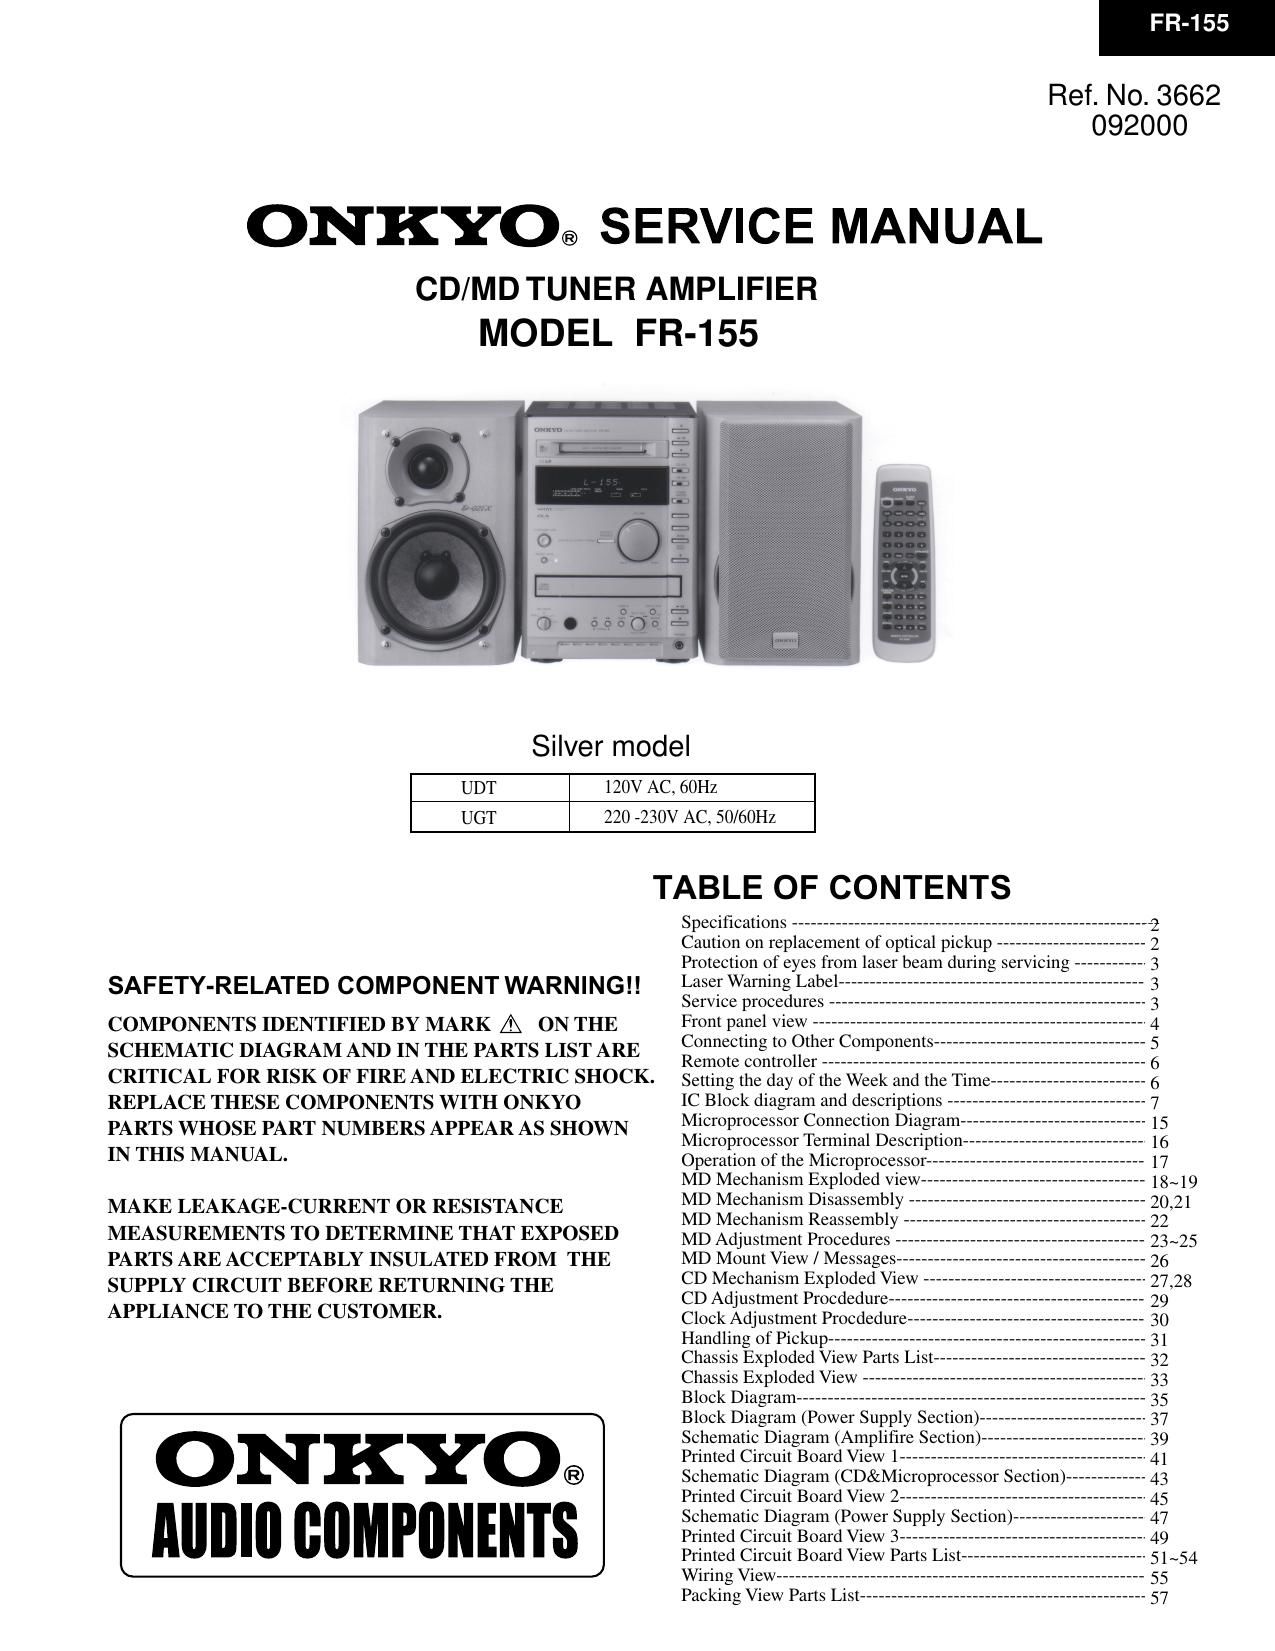 Onkyo FR 155 Service Manual